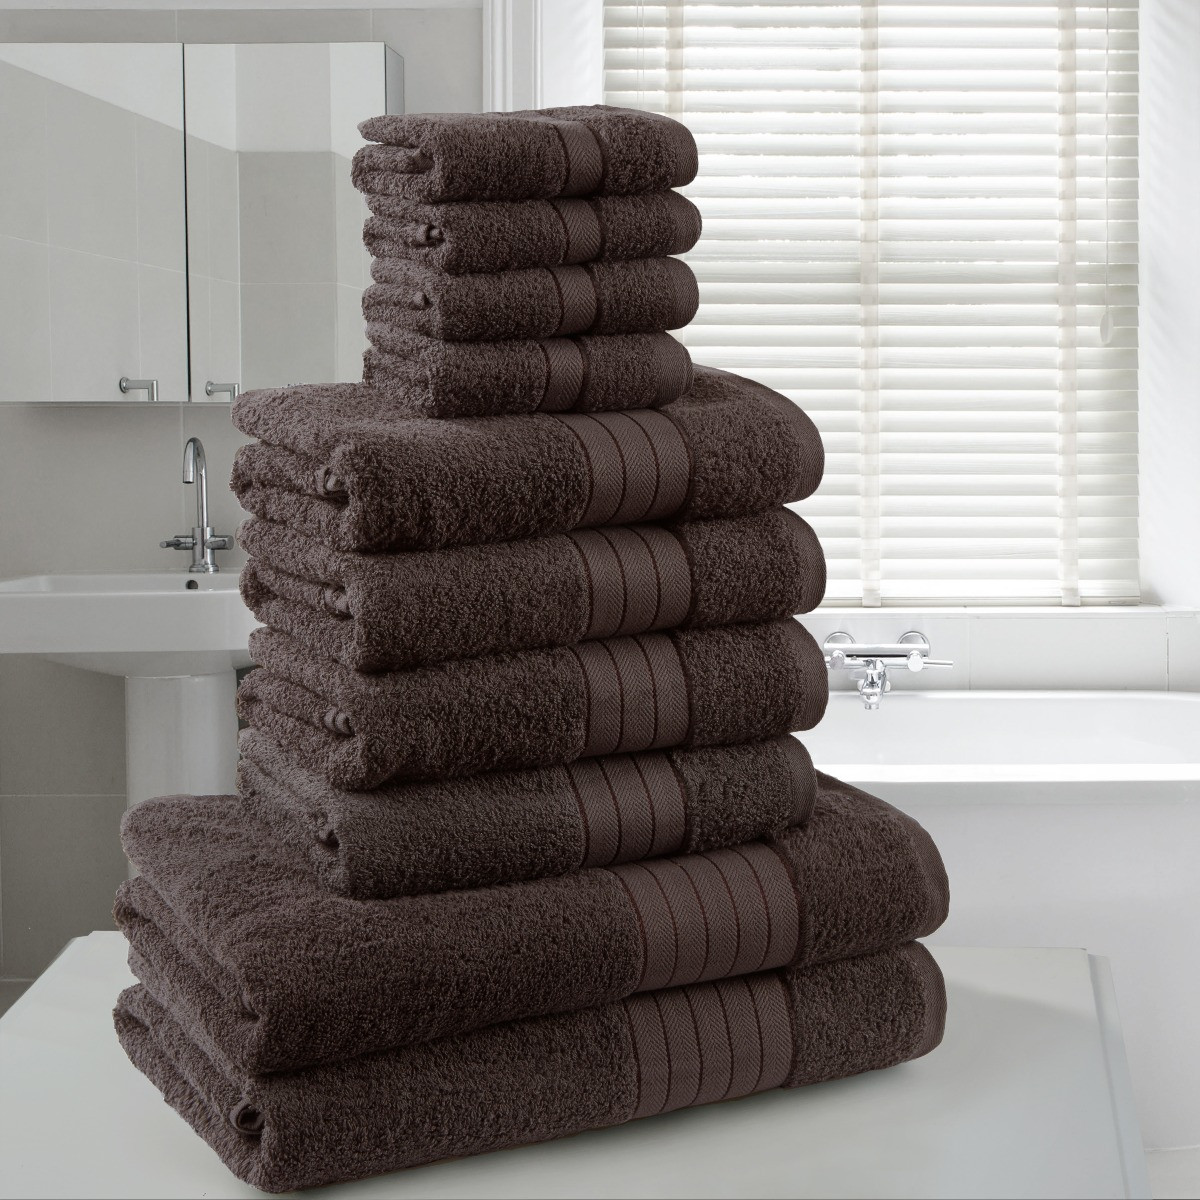 Brentfords Towel Bale 10 Piece - Chocolate>